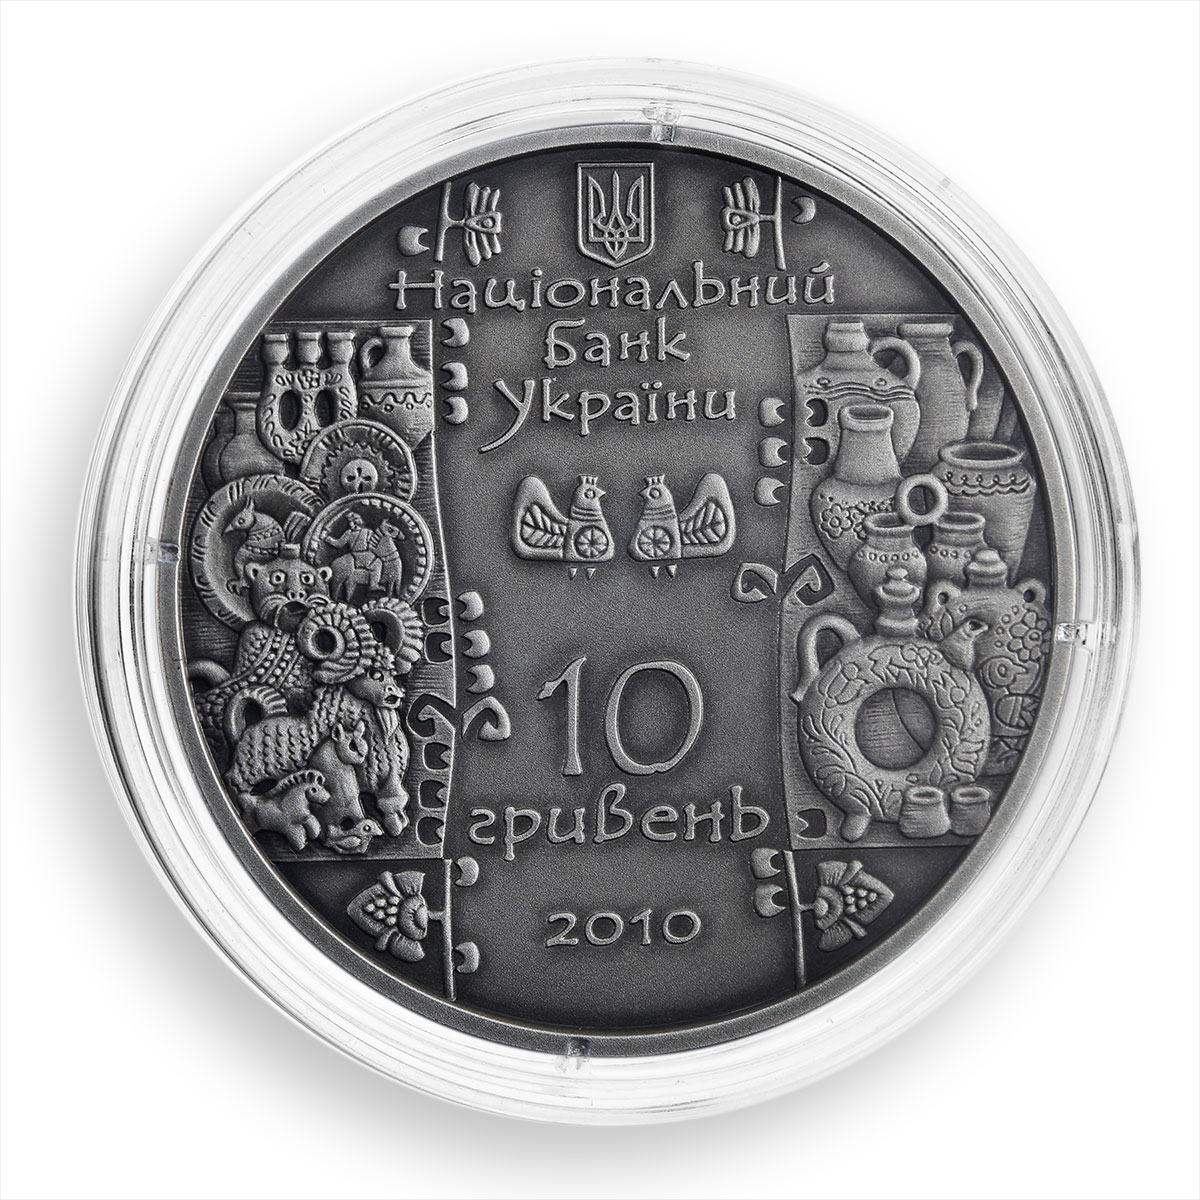 Ukraine 10 hryvnia Potter Gonchar Folk Craft Forge silver proof coin 2010